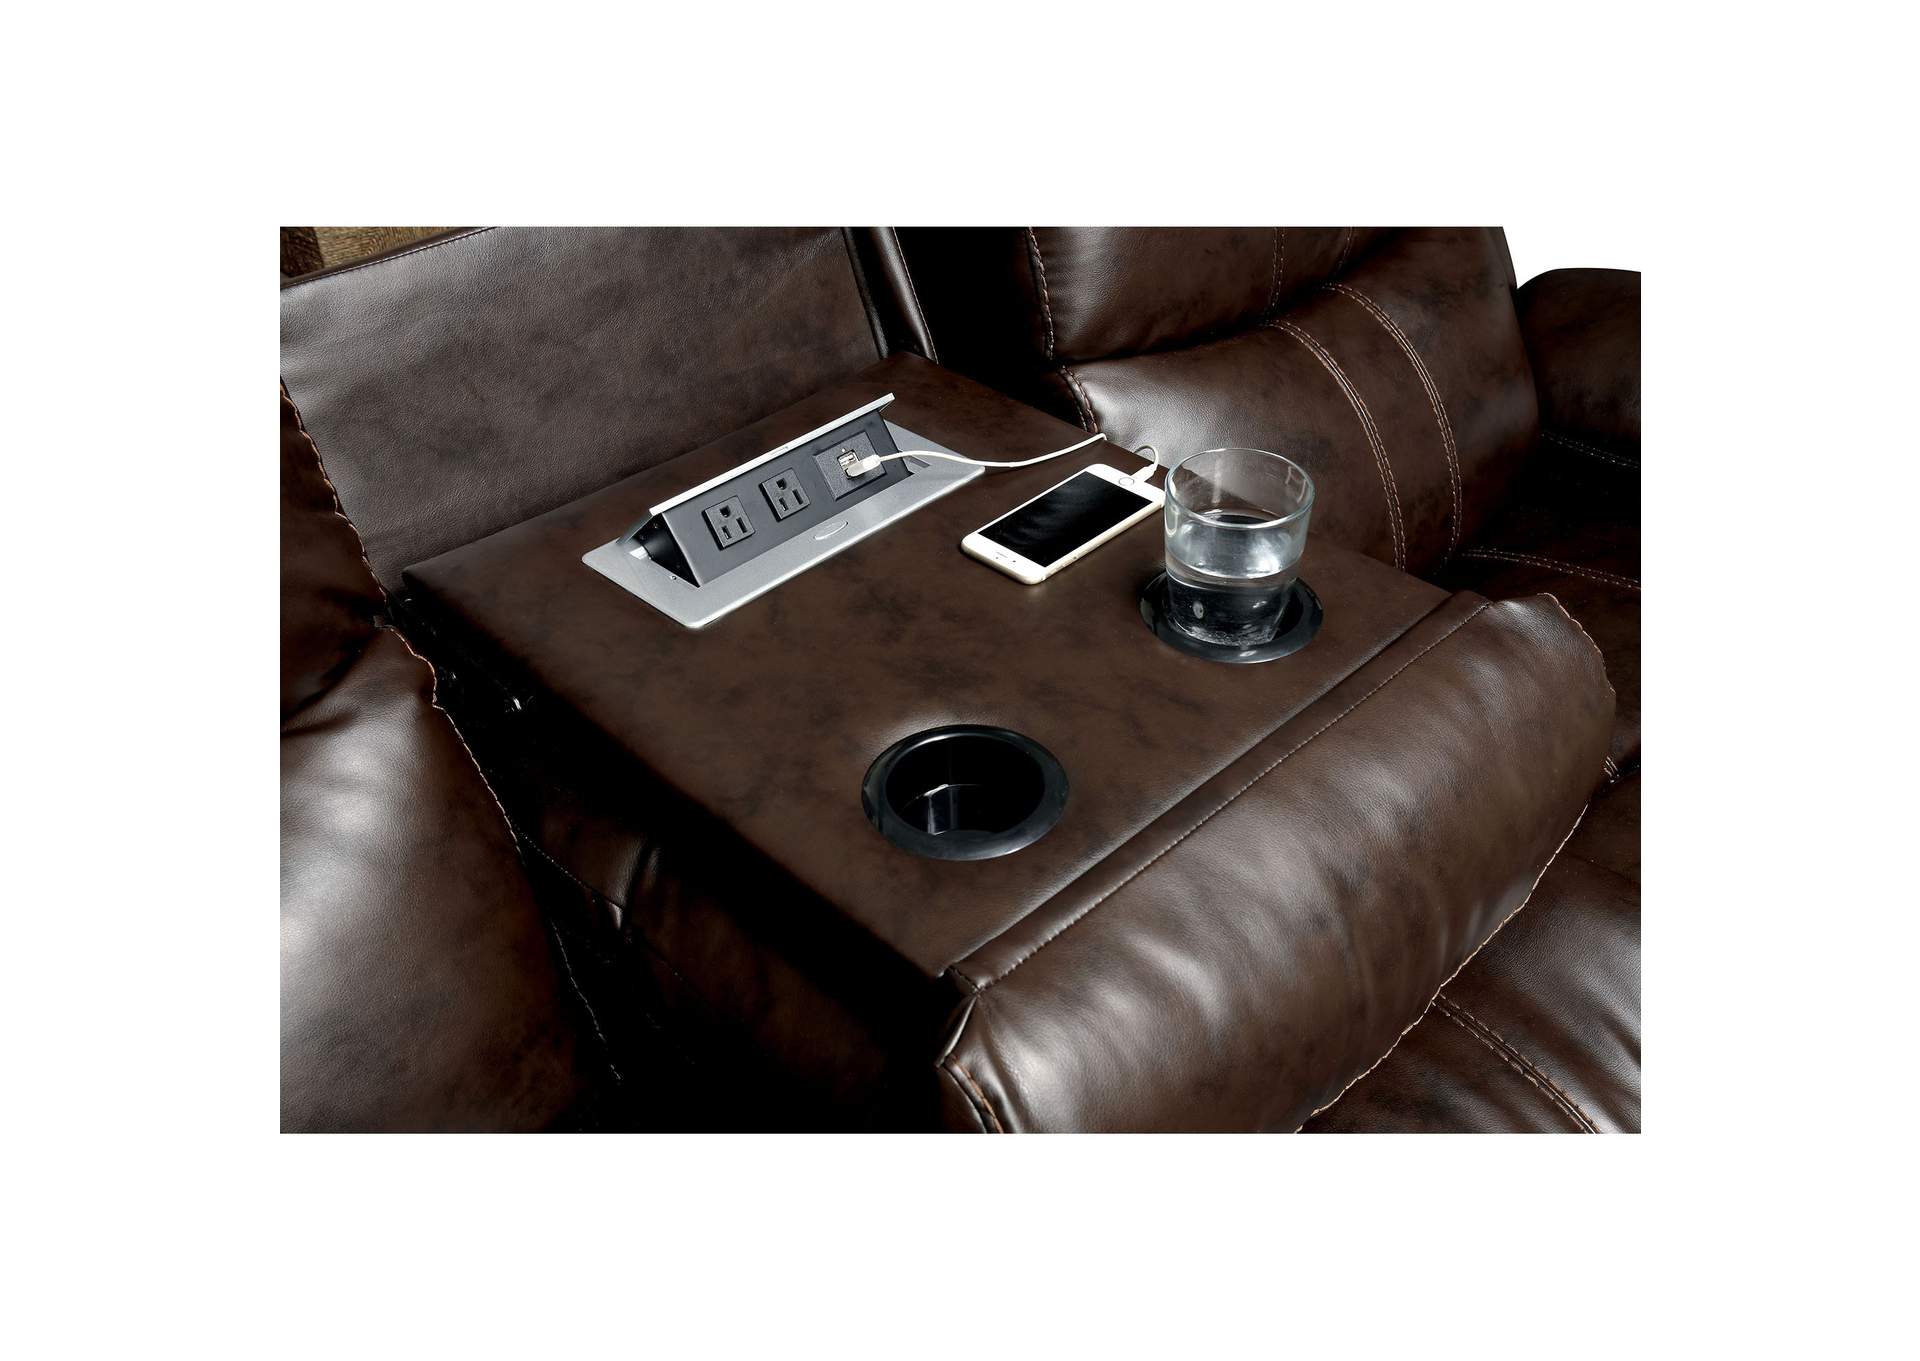 Listowel Sofa,Furniture of America